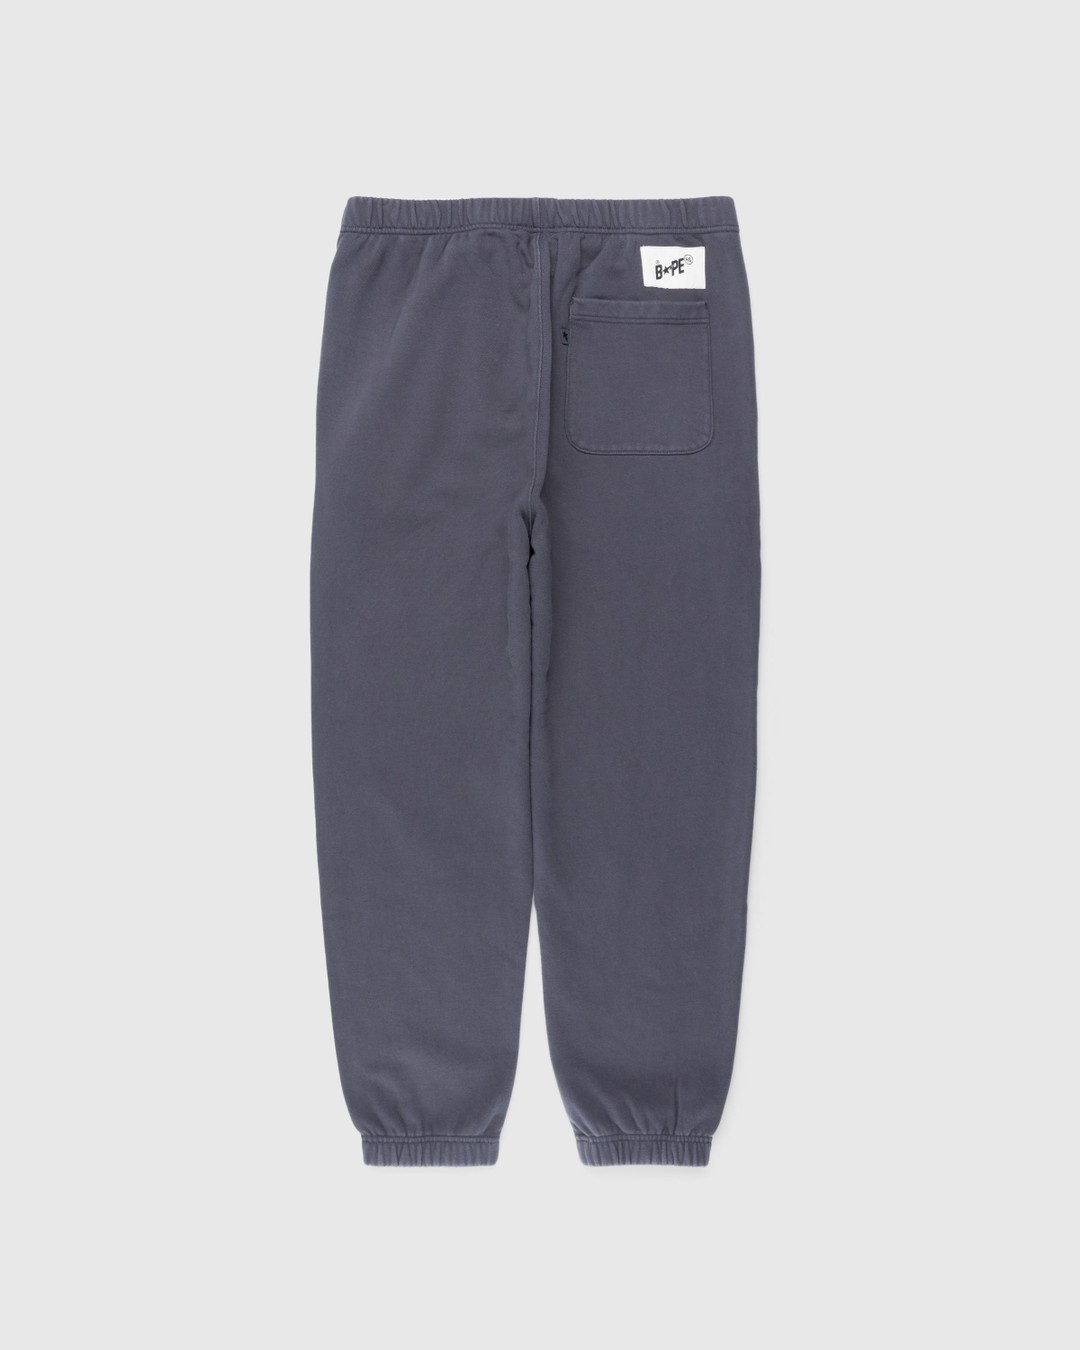 BAPE x Highsnobiety – Heavy Washed Sweat Pants Charcoal - Sweatpants - Grey - Image 2